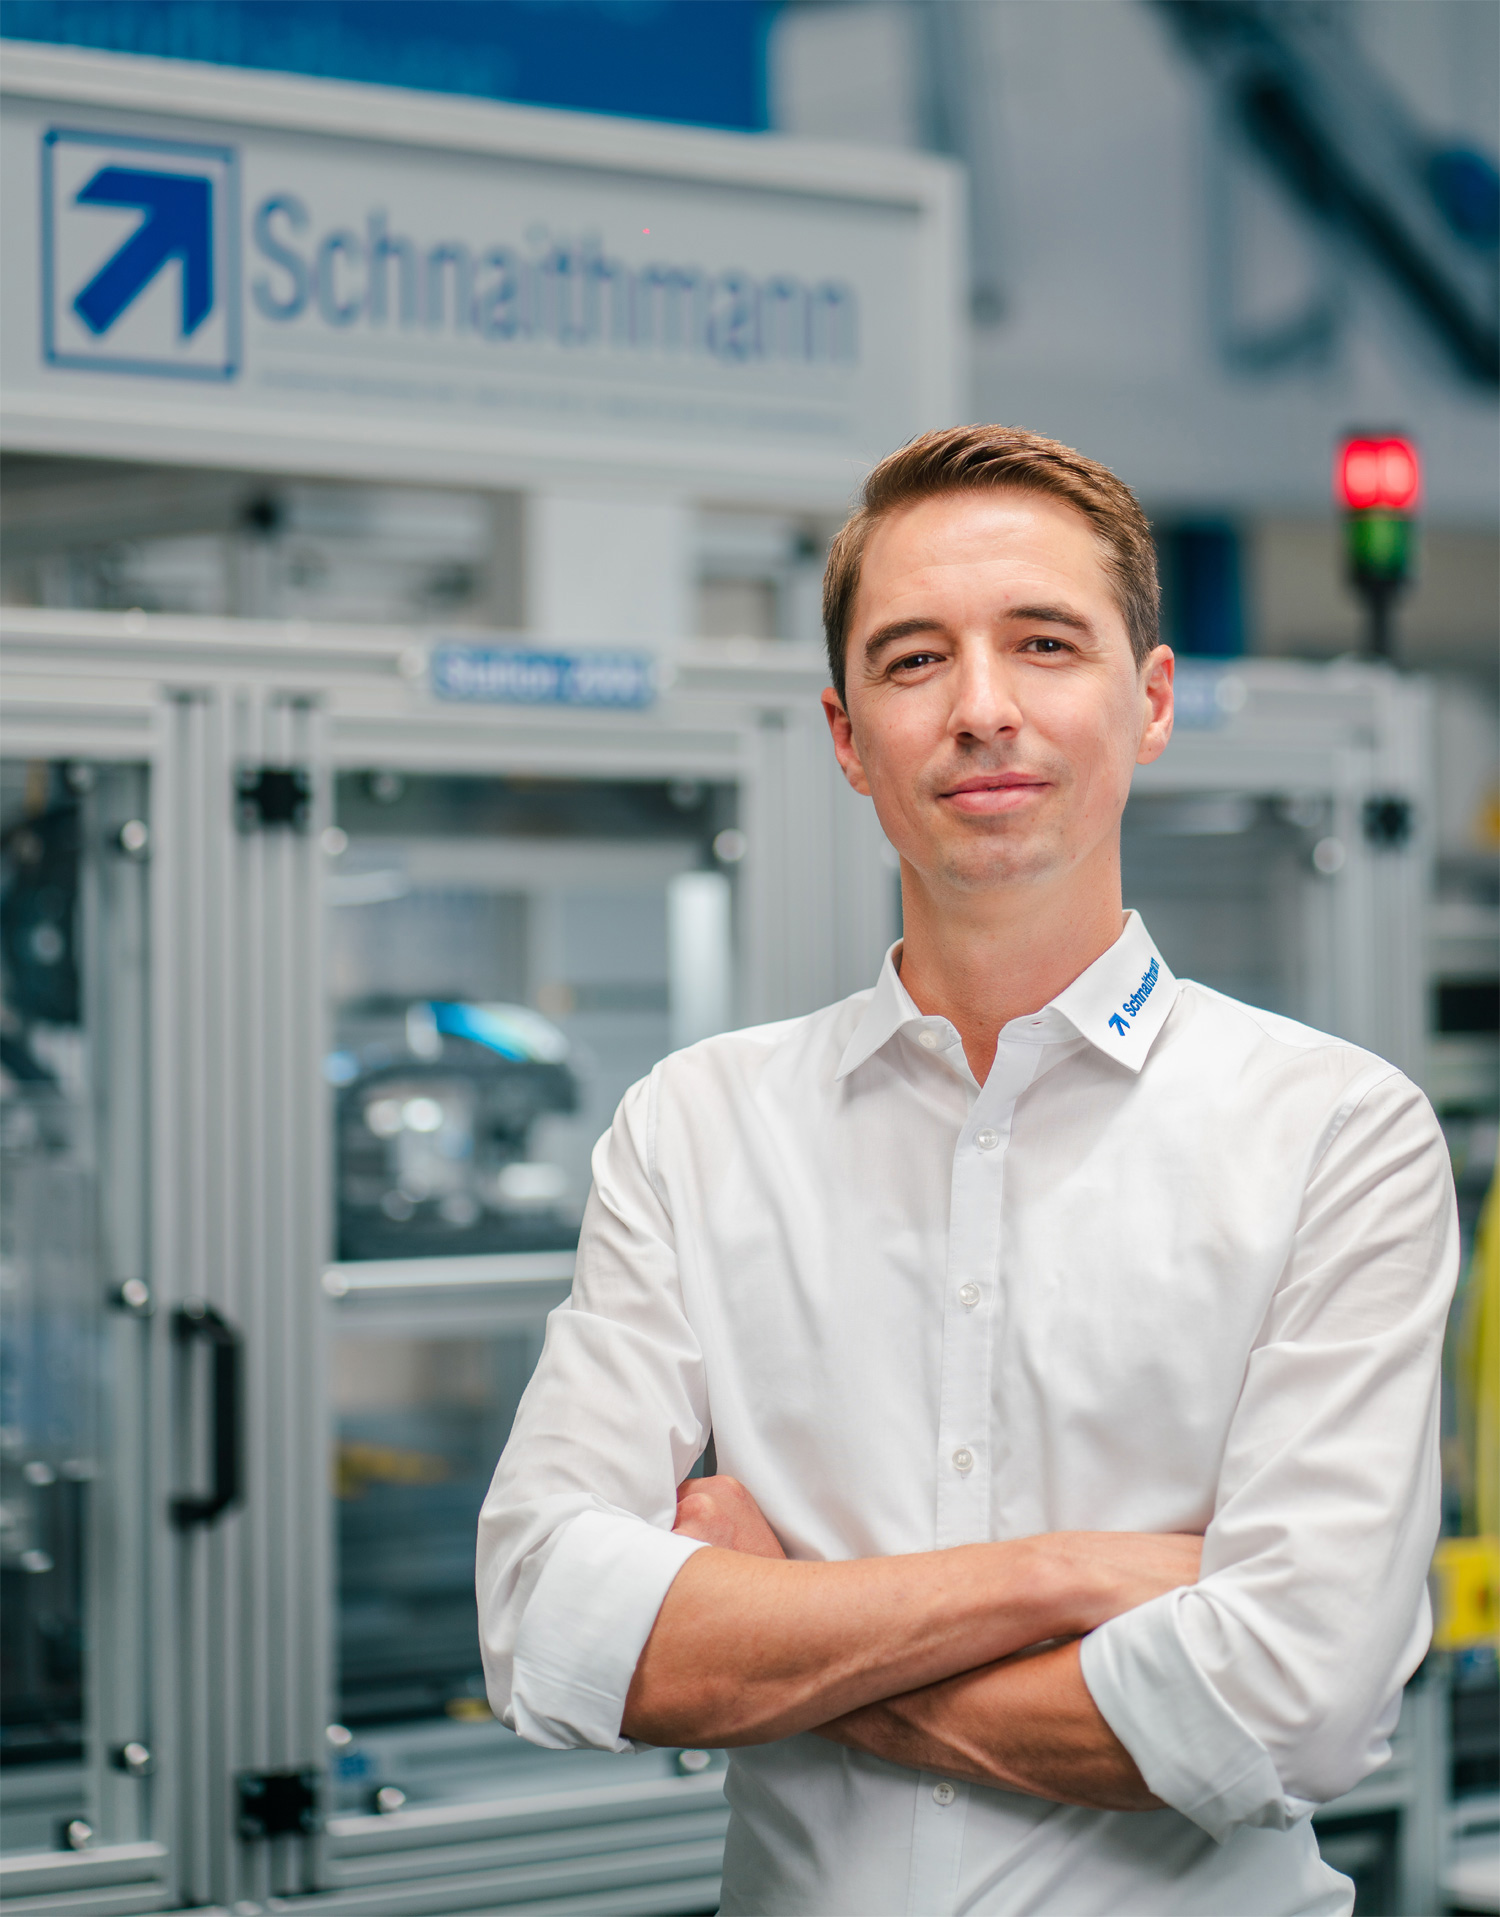 Chris Klöpfer, Technischer Vertrieb bei Schnaithmann <i>(Bildquellen: Schnaithmann Maschinenbau GmbH)</i>